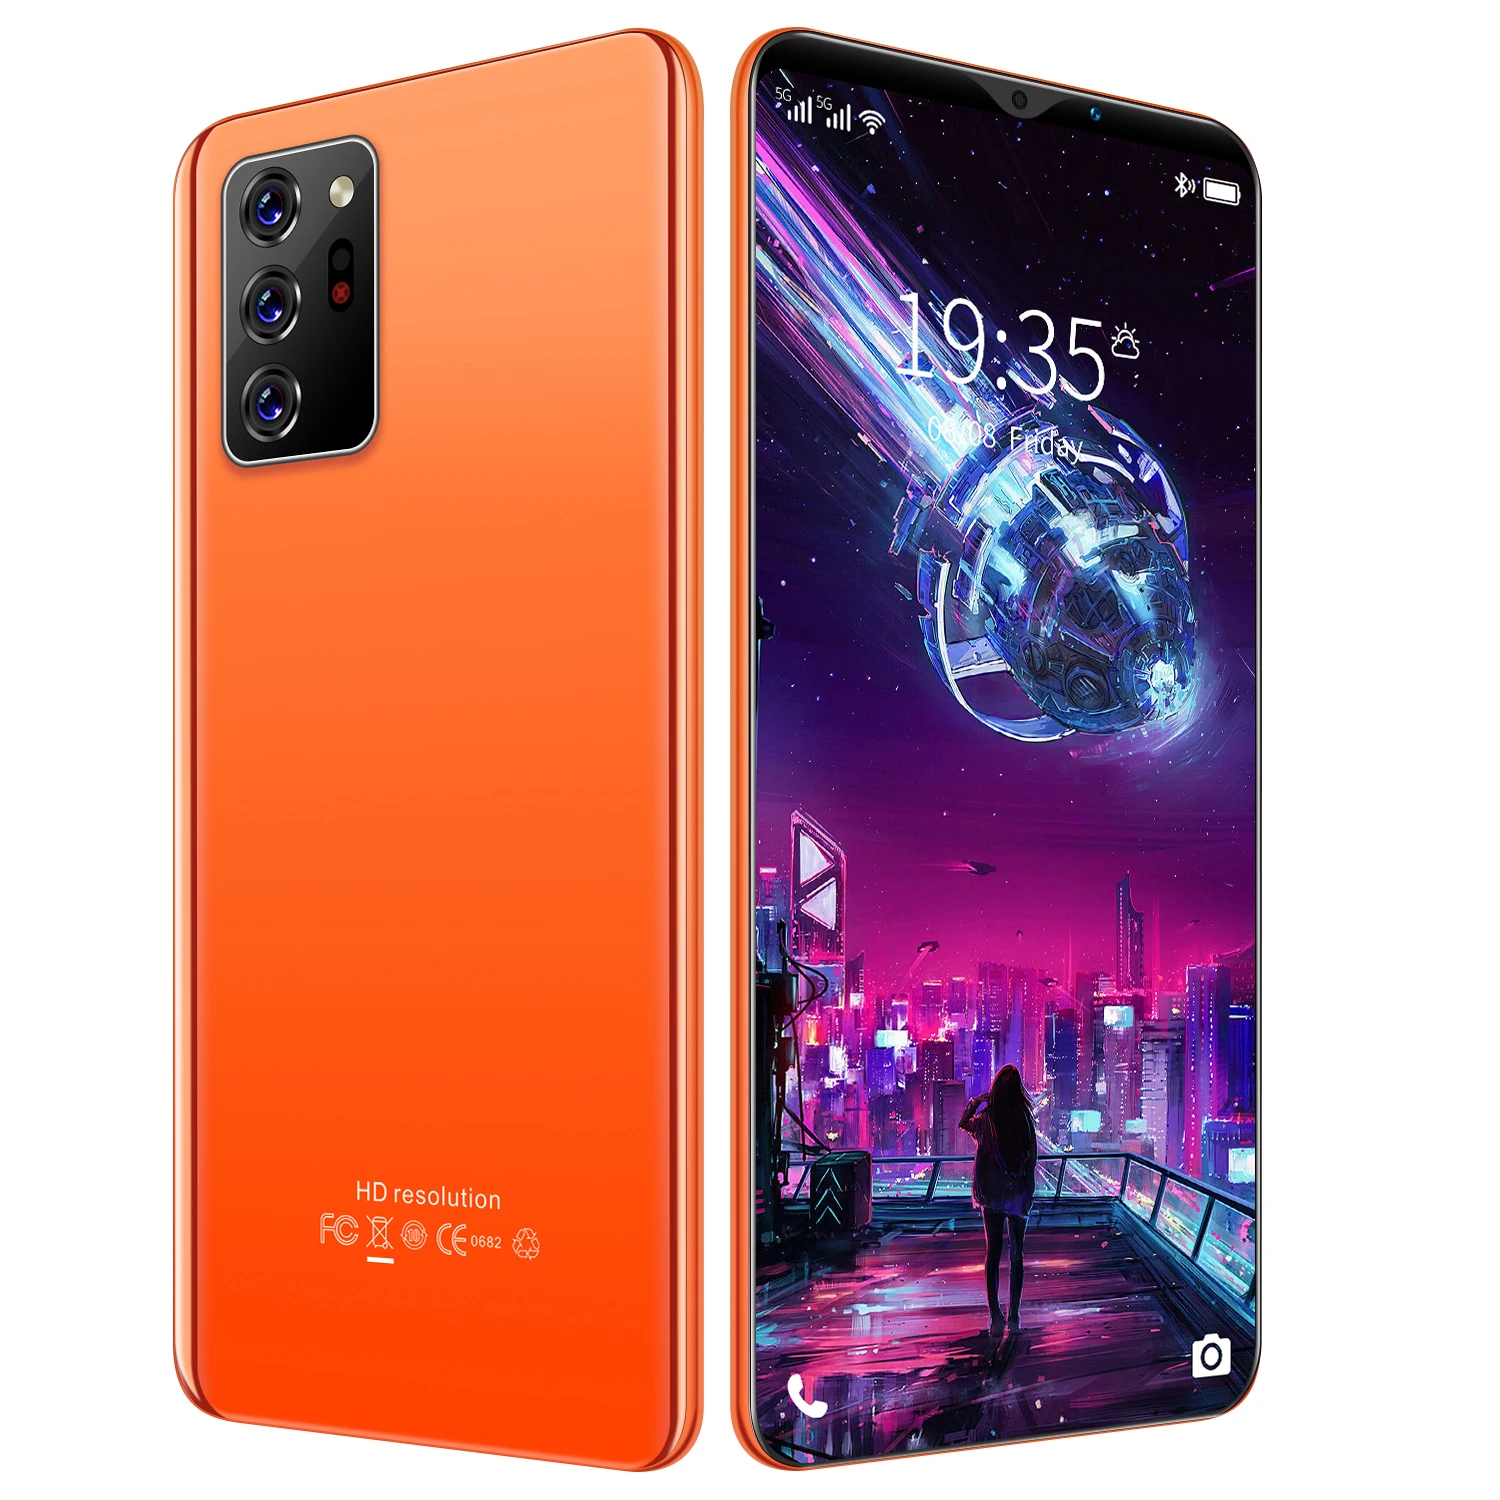 

2021 High quality Facewake Fingerprint Unlock mobile phone mini slim OEM ODM promotion Android Smartphone 6GB+128GB 5G phones mo, Blue,orange ,purple